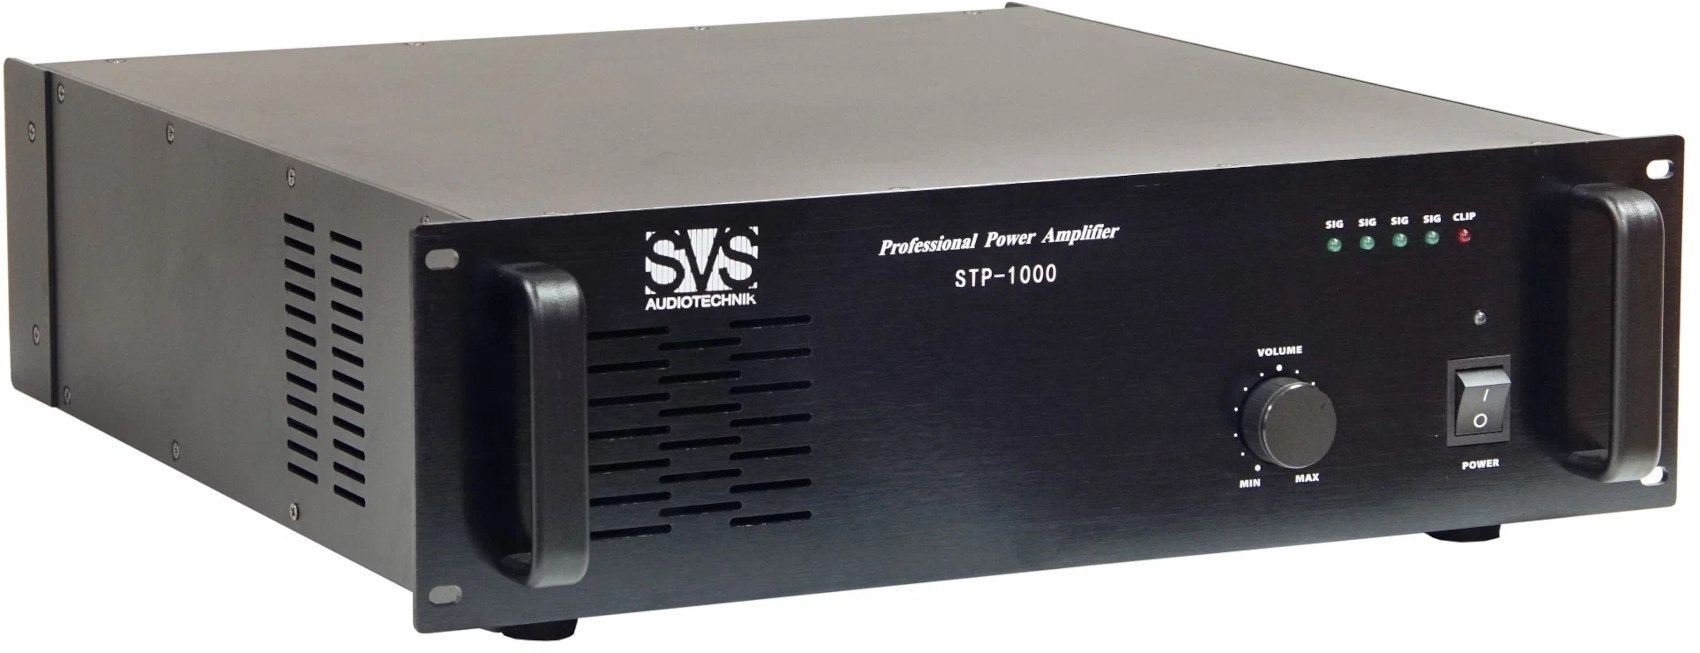 SVS Audiotechnik STP-1000 - фото 2